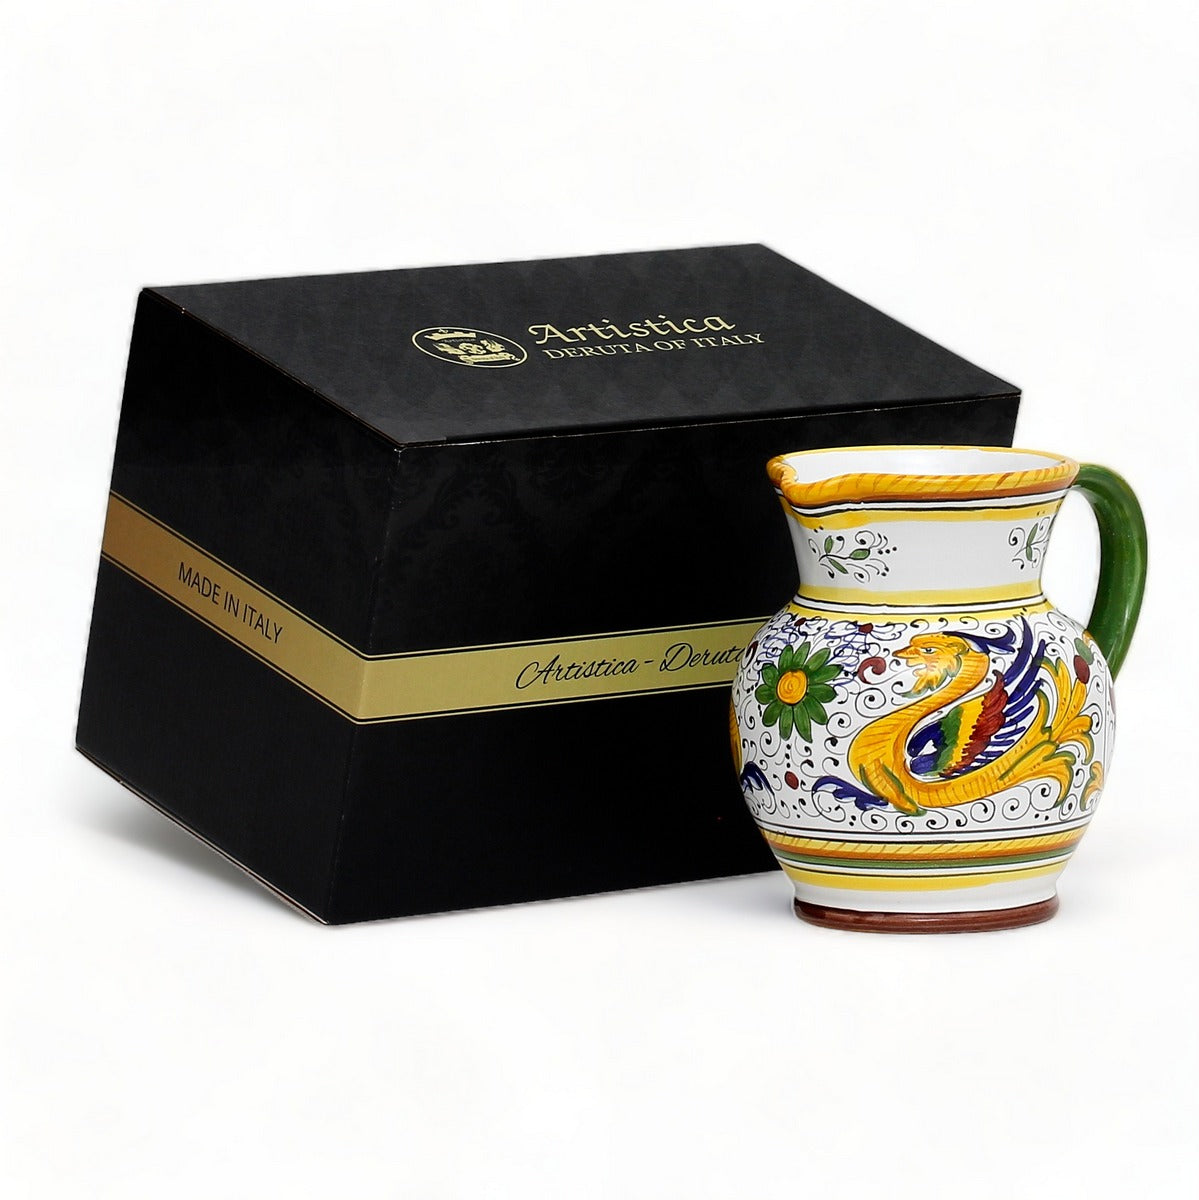 GIFT BOX: With authentic Deruta hand painted ceramic - Pitcher Raffaellesco Design